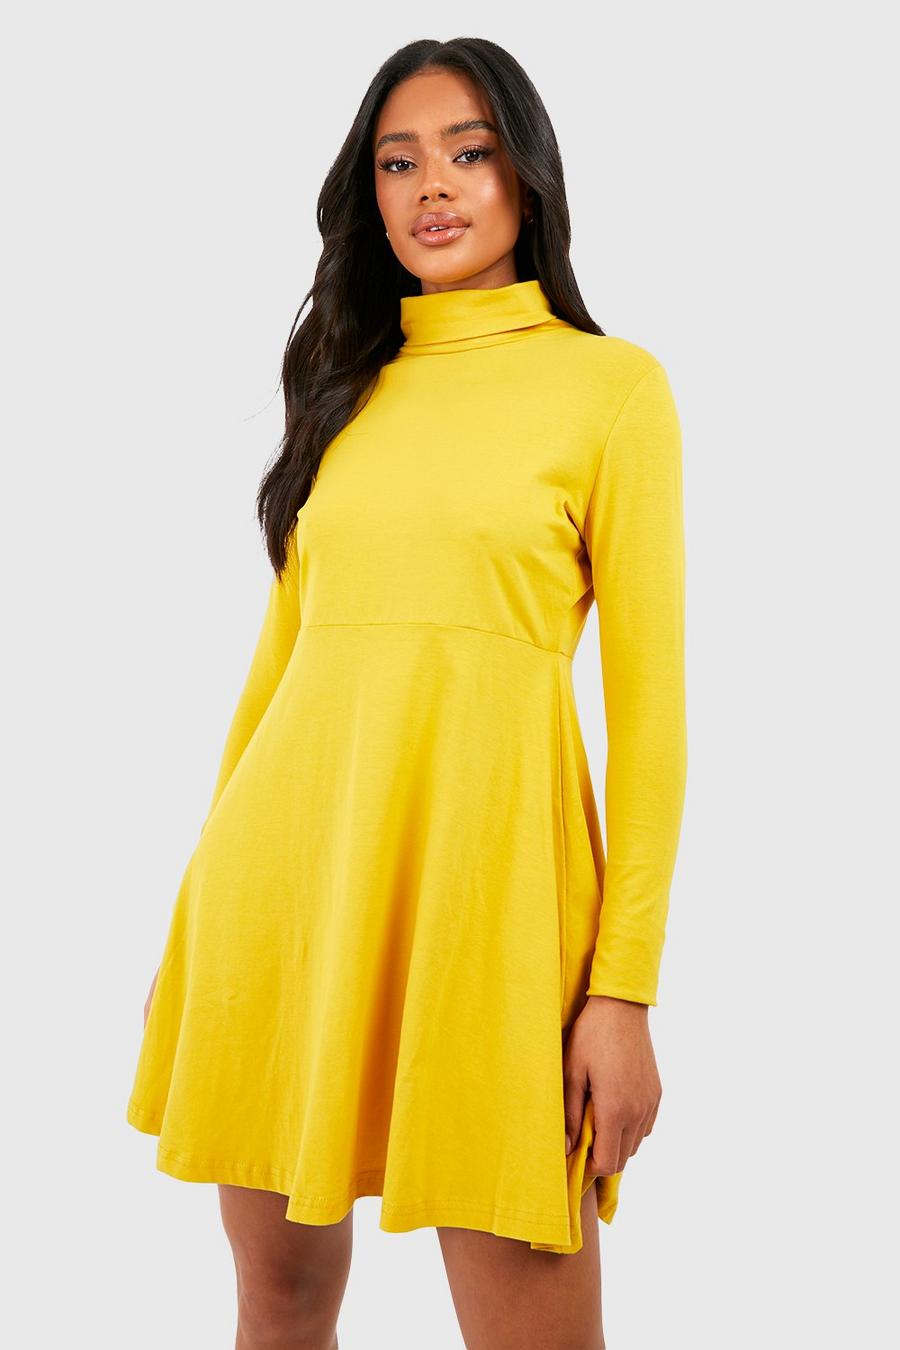 Mustard yellow Basic Long Sleeve High Neck Skater Dress